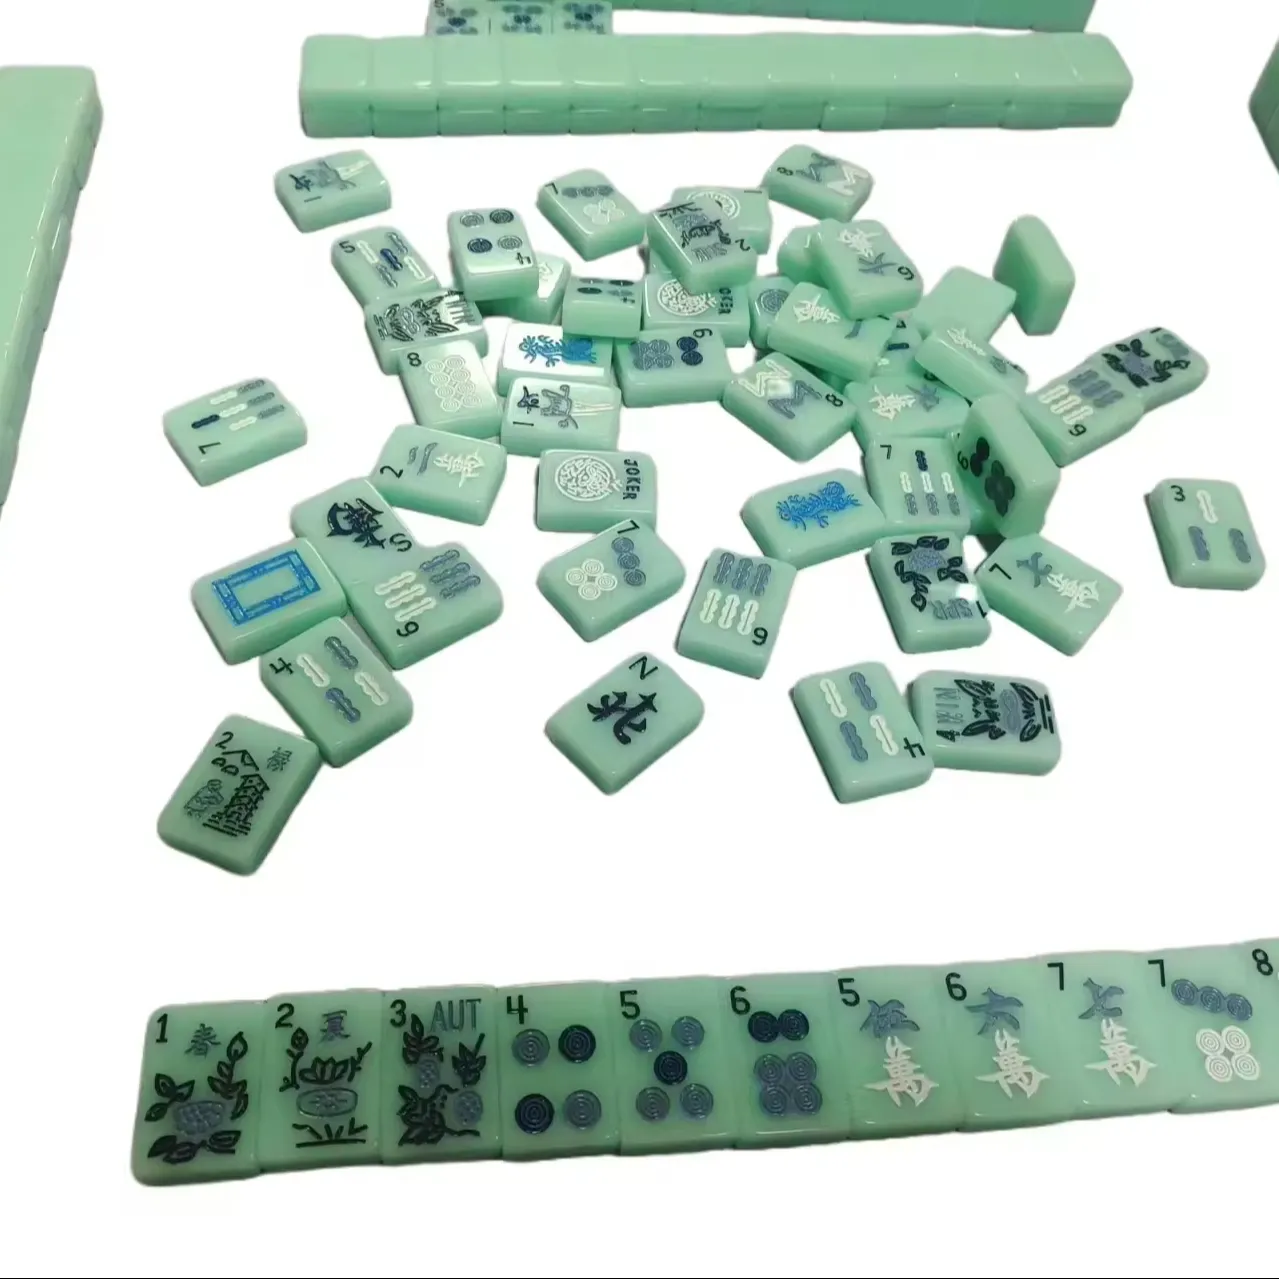 Amerikanisches Familientischspiel Acryl Mahjong-Set Mahjong handbemaltes Acrylgrünes Mahjong tragbare Größe und leichtes Gewicht